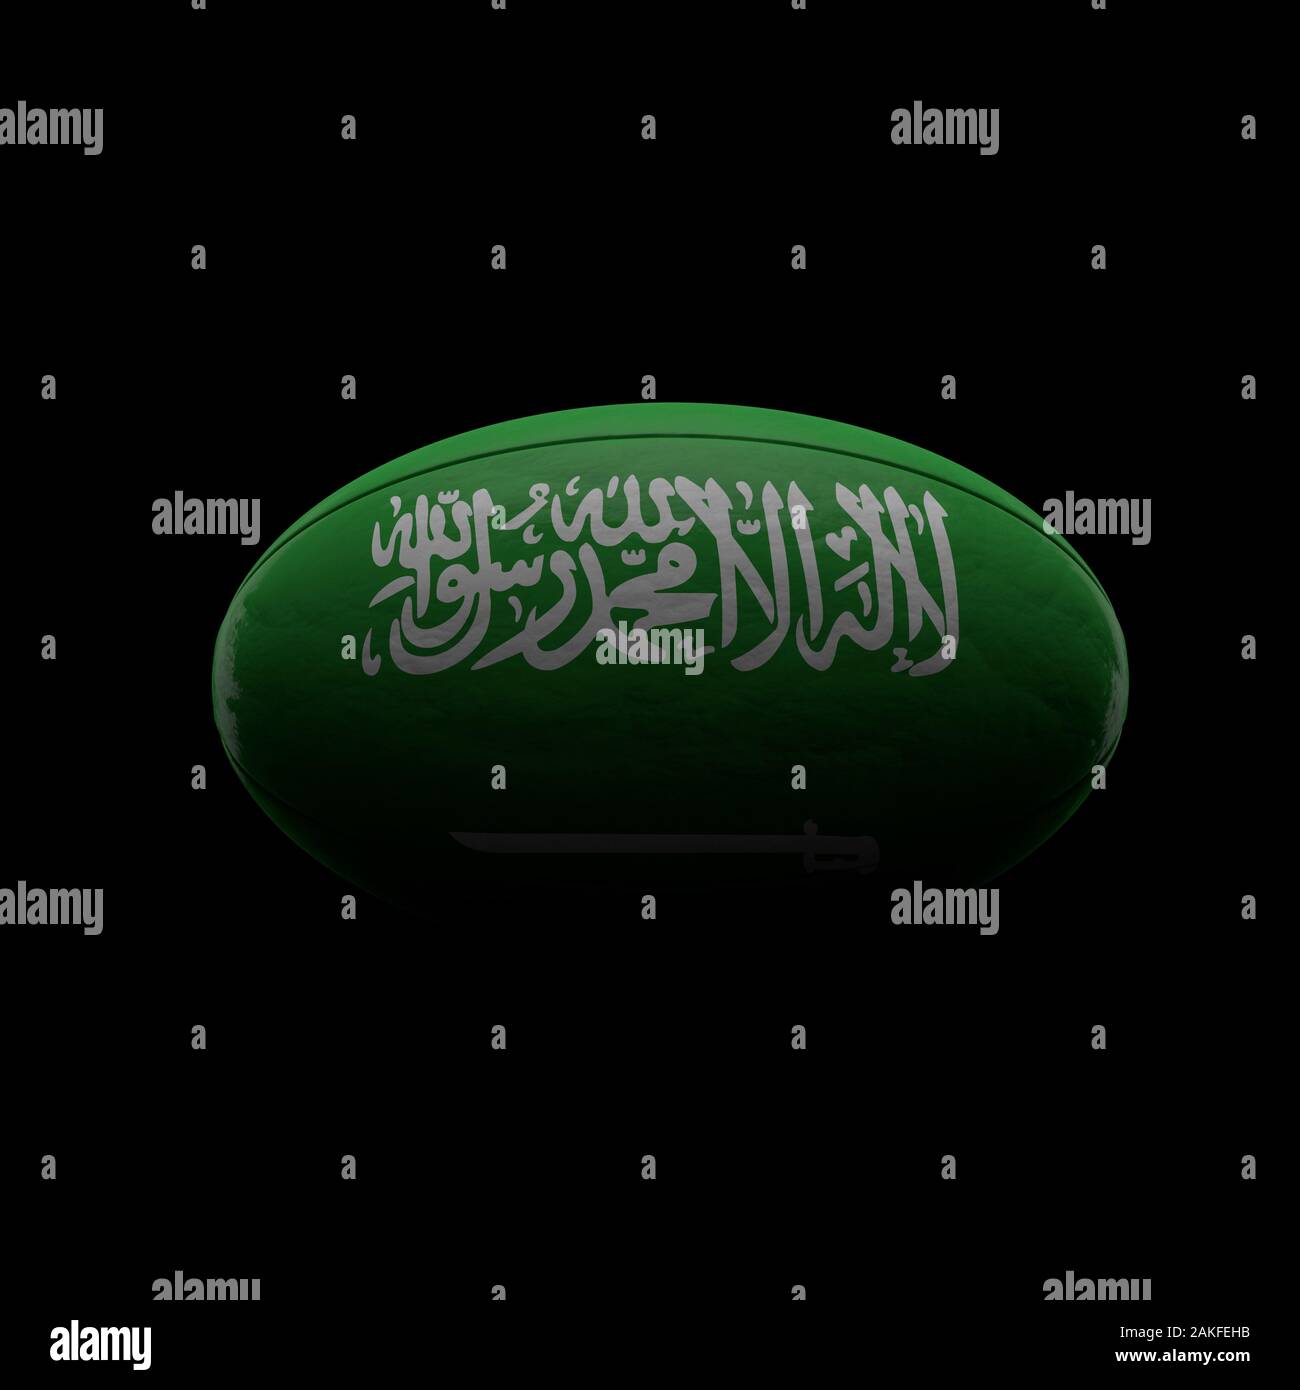 Saudi Arabia flag rugby ball against black background. 3D Rendering Stock Photo